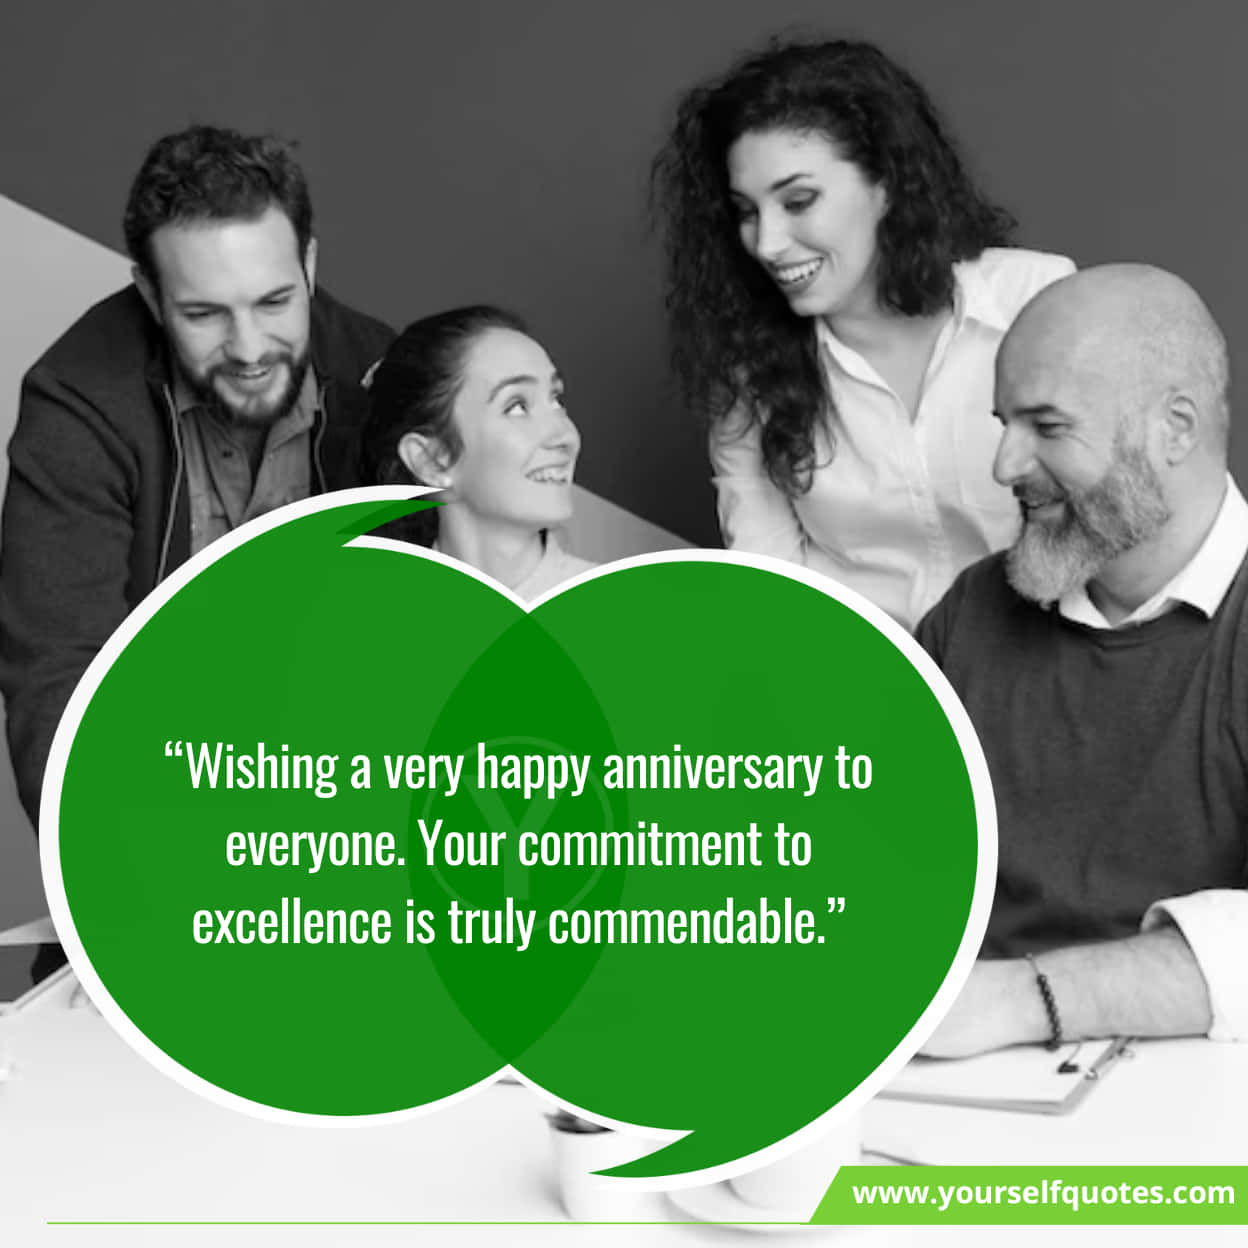 Company anniversary appreciation messages